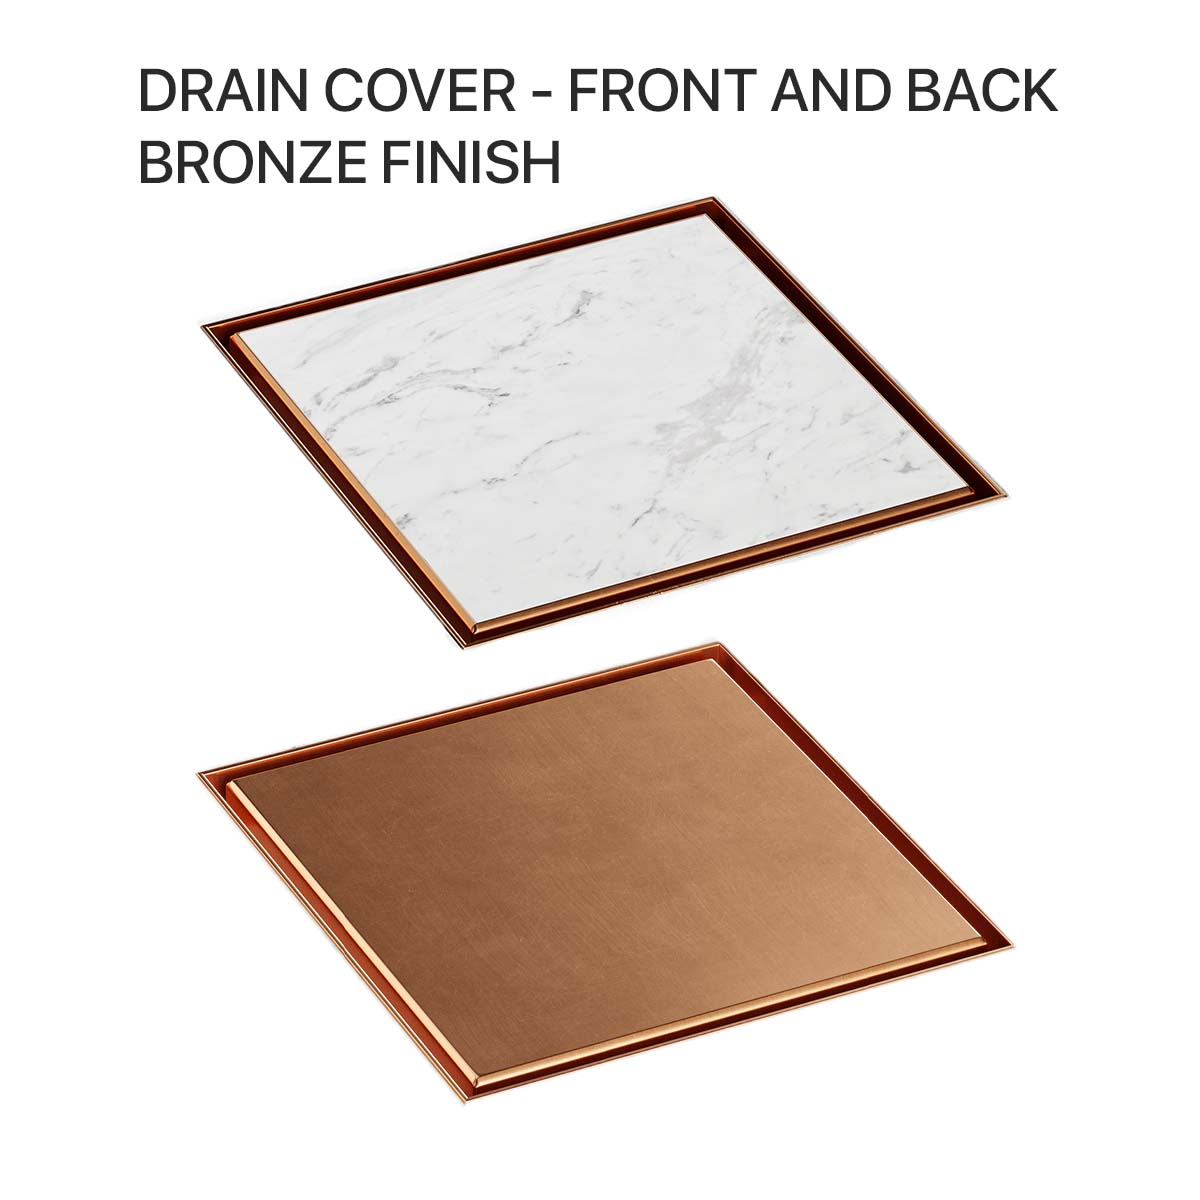 sharpdrain square drain covers bronze